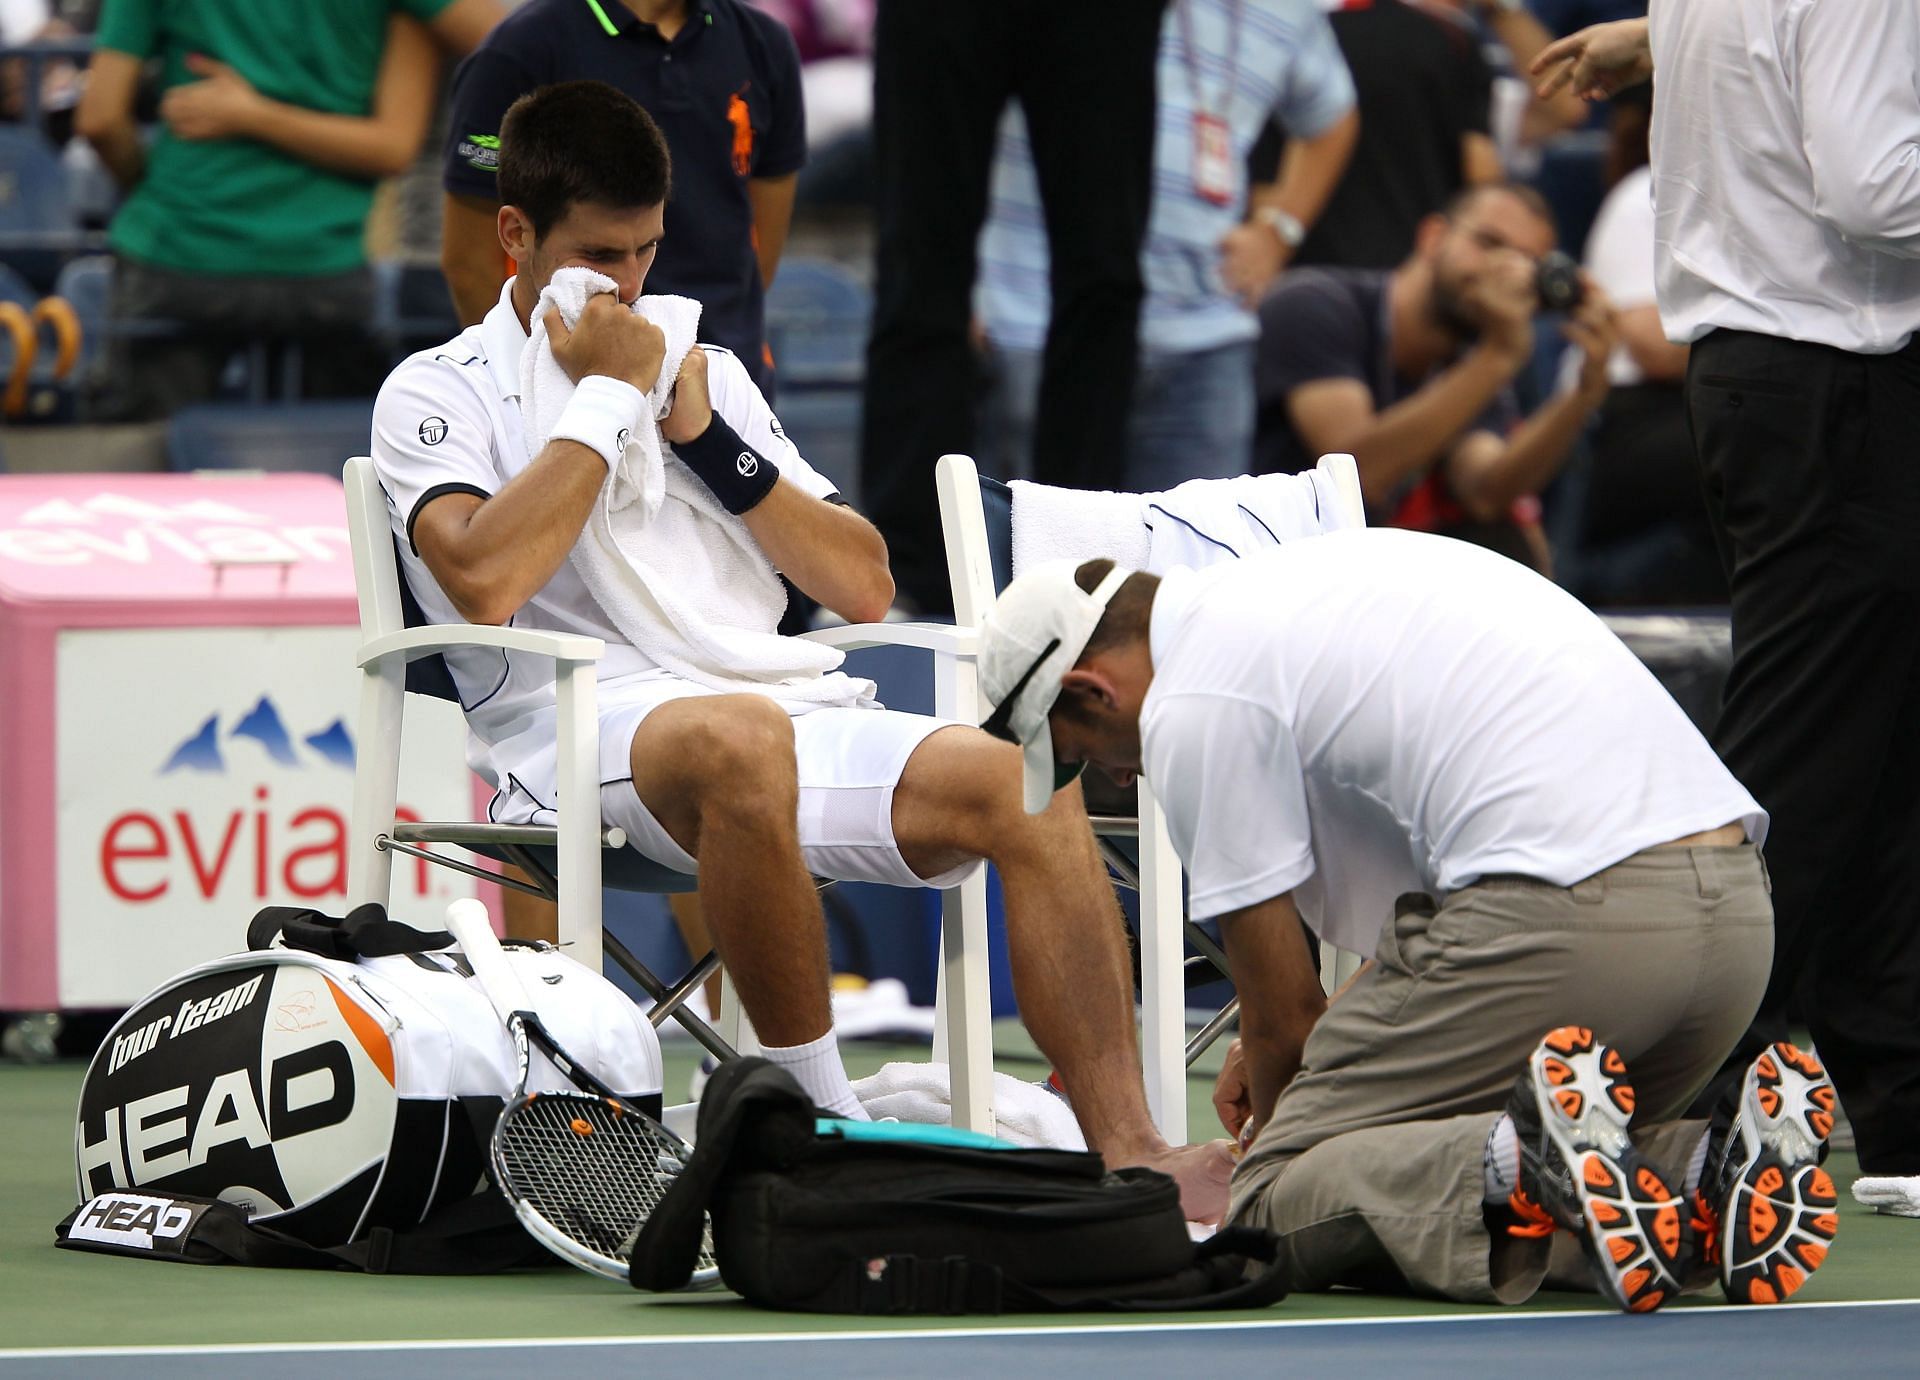 Novak Djokovic receives treatment at the 2011 US Open